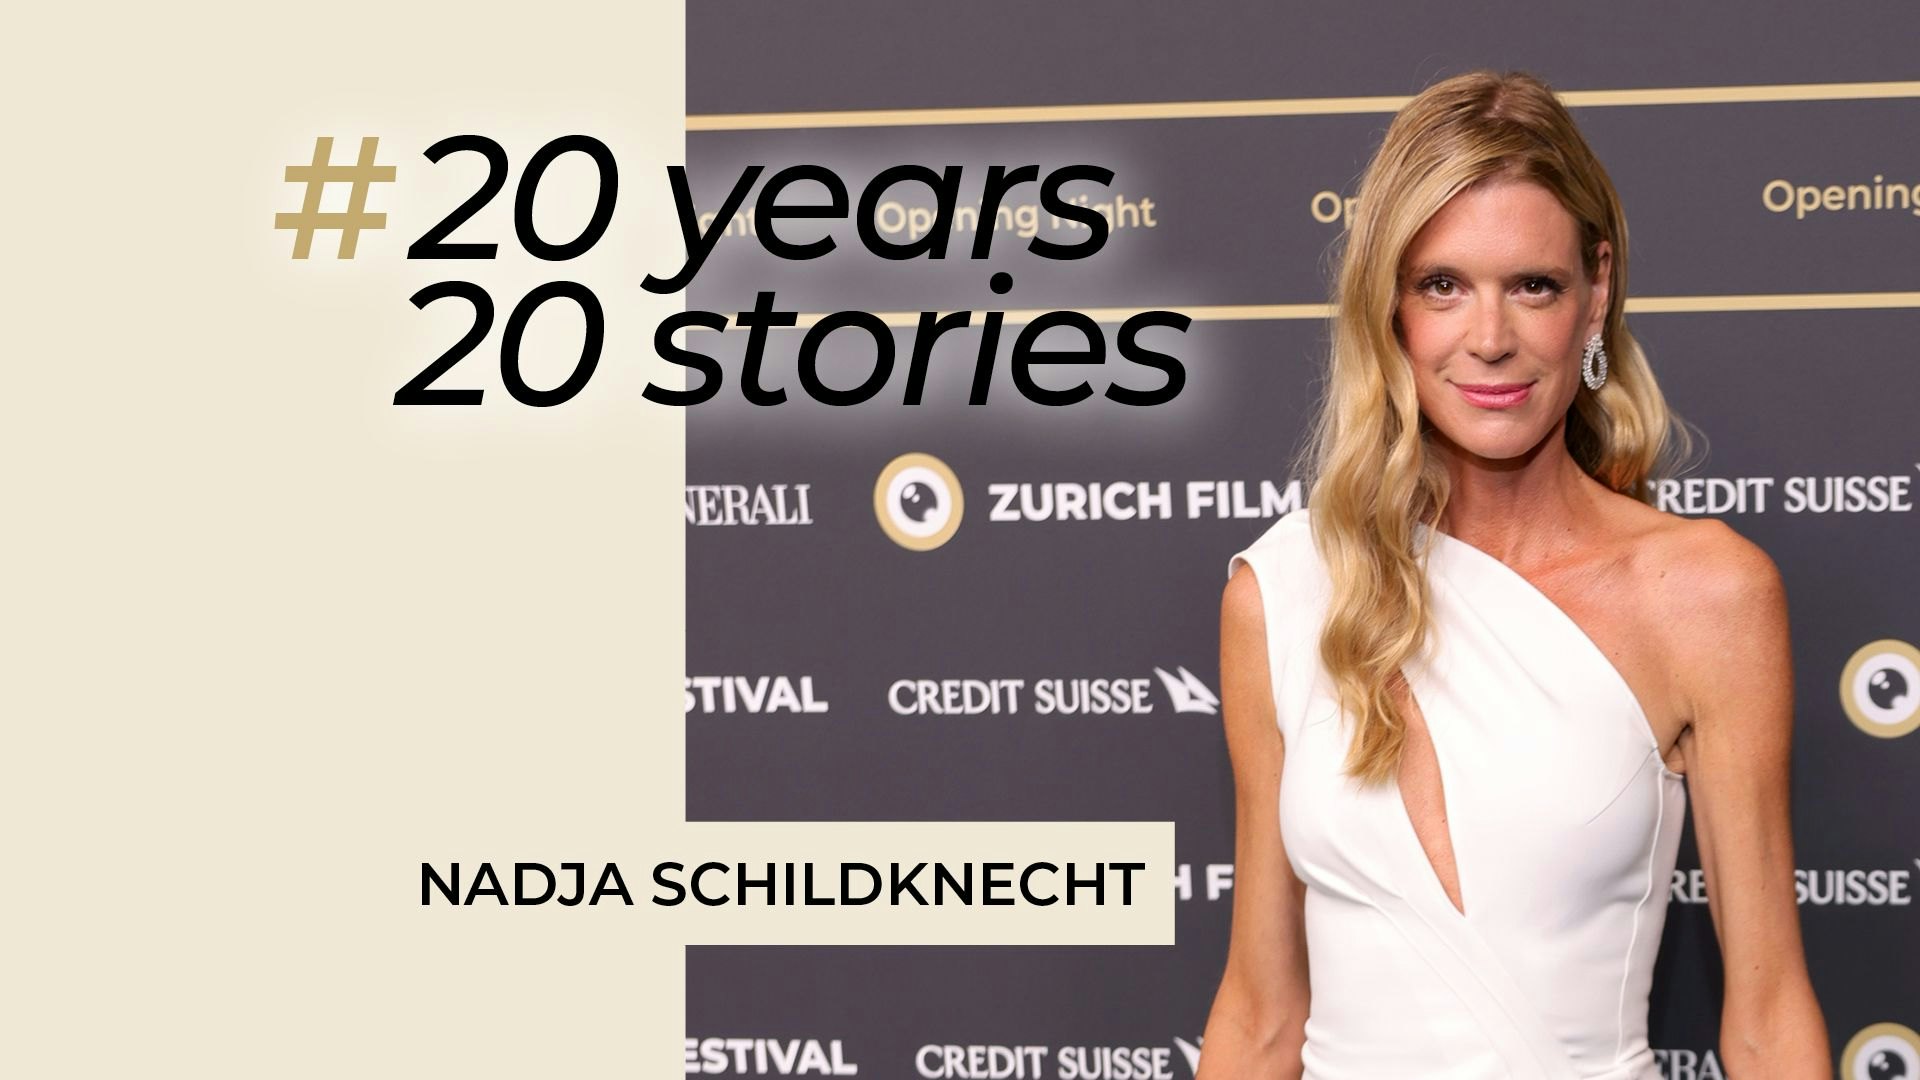 20 years, 20 stories: Nadja Schildknecht